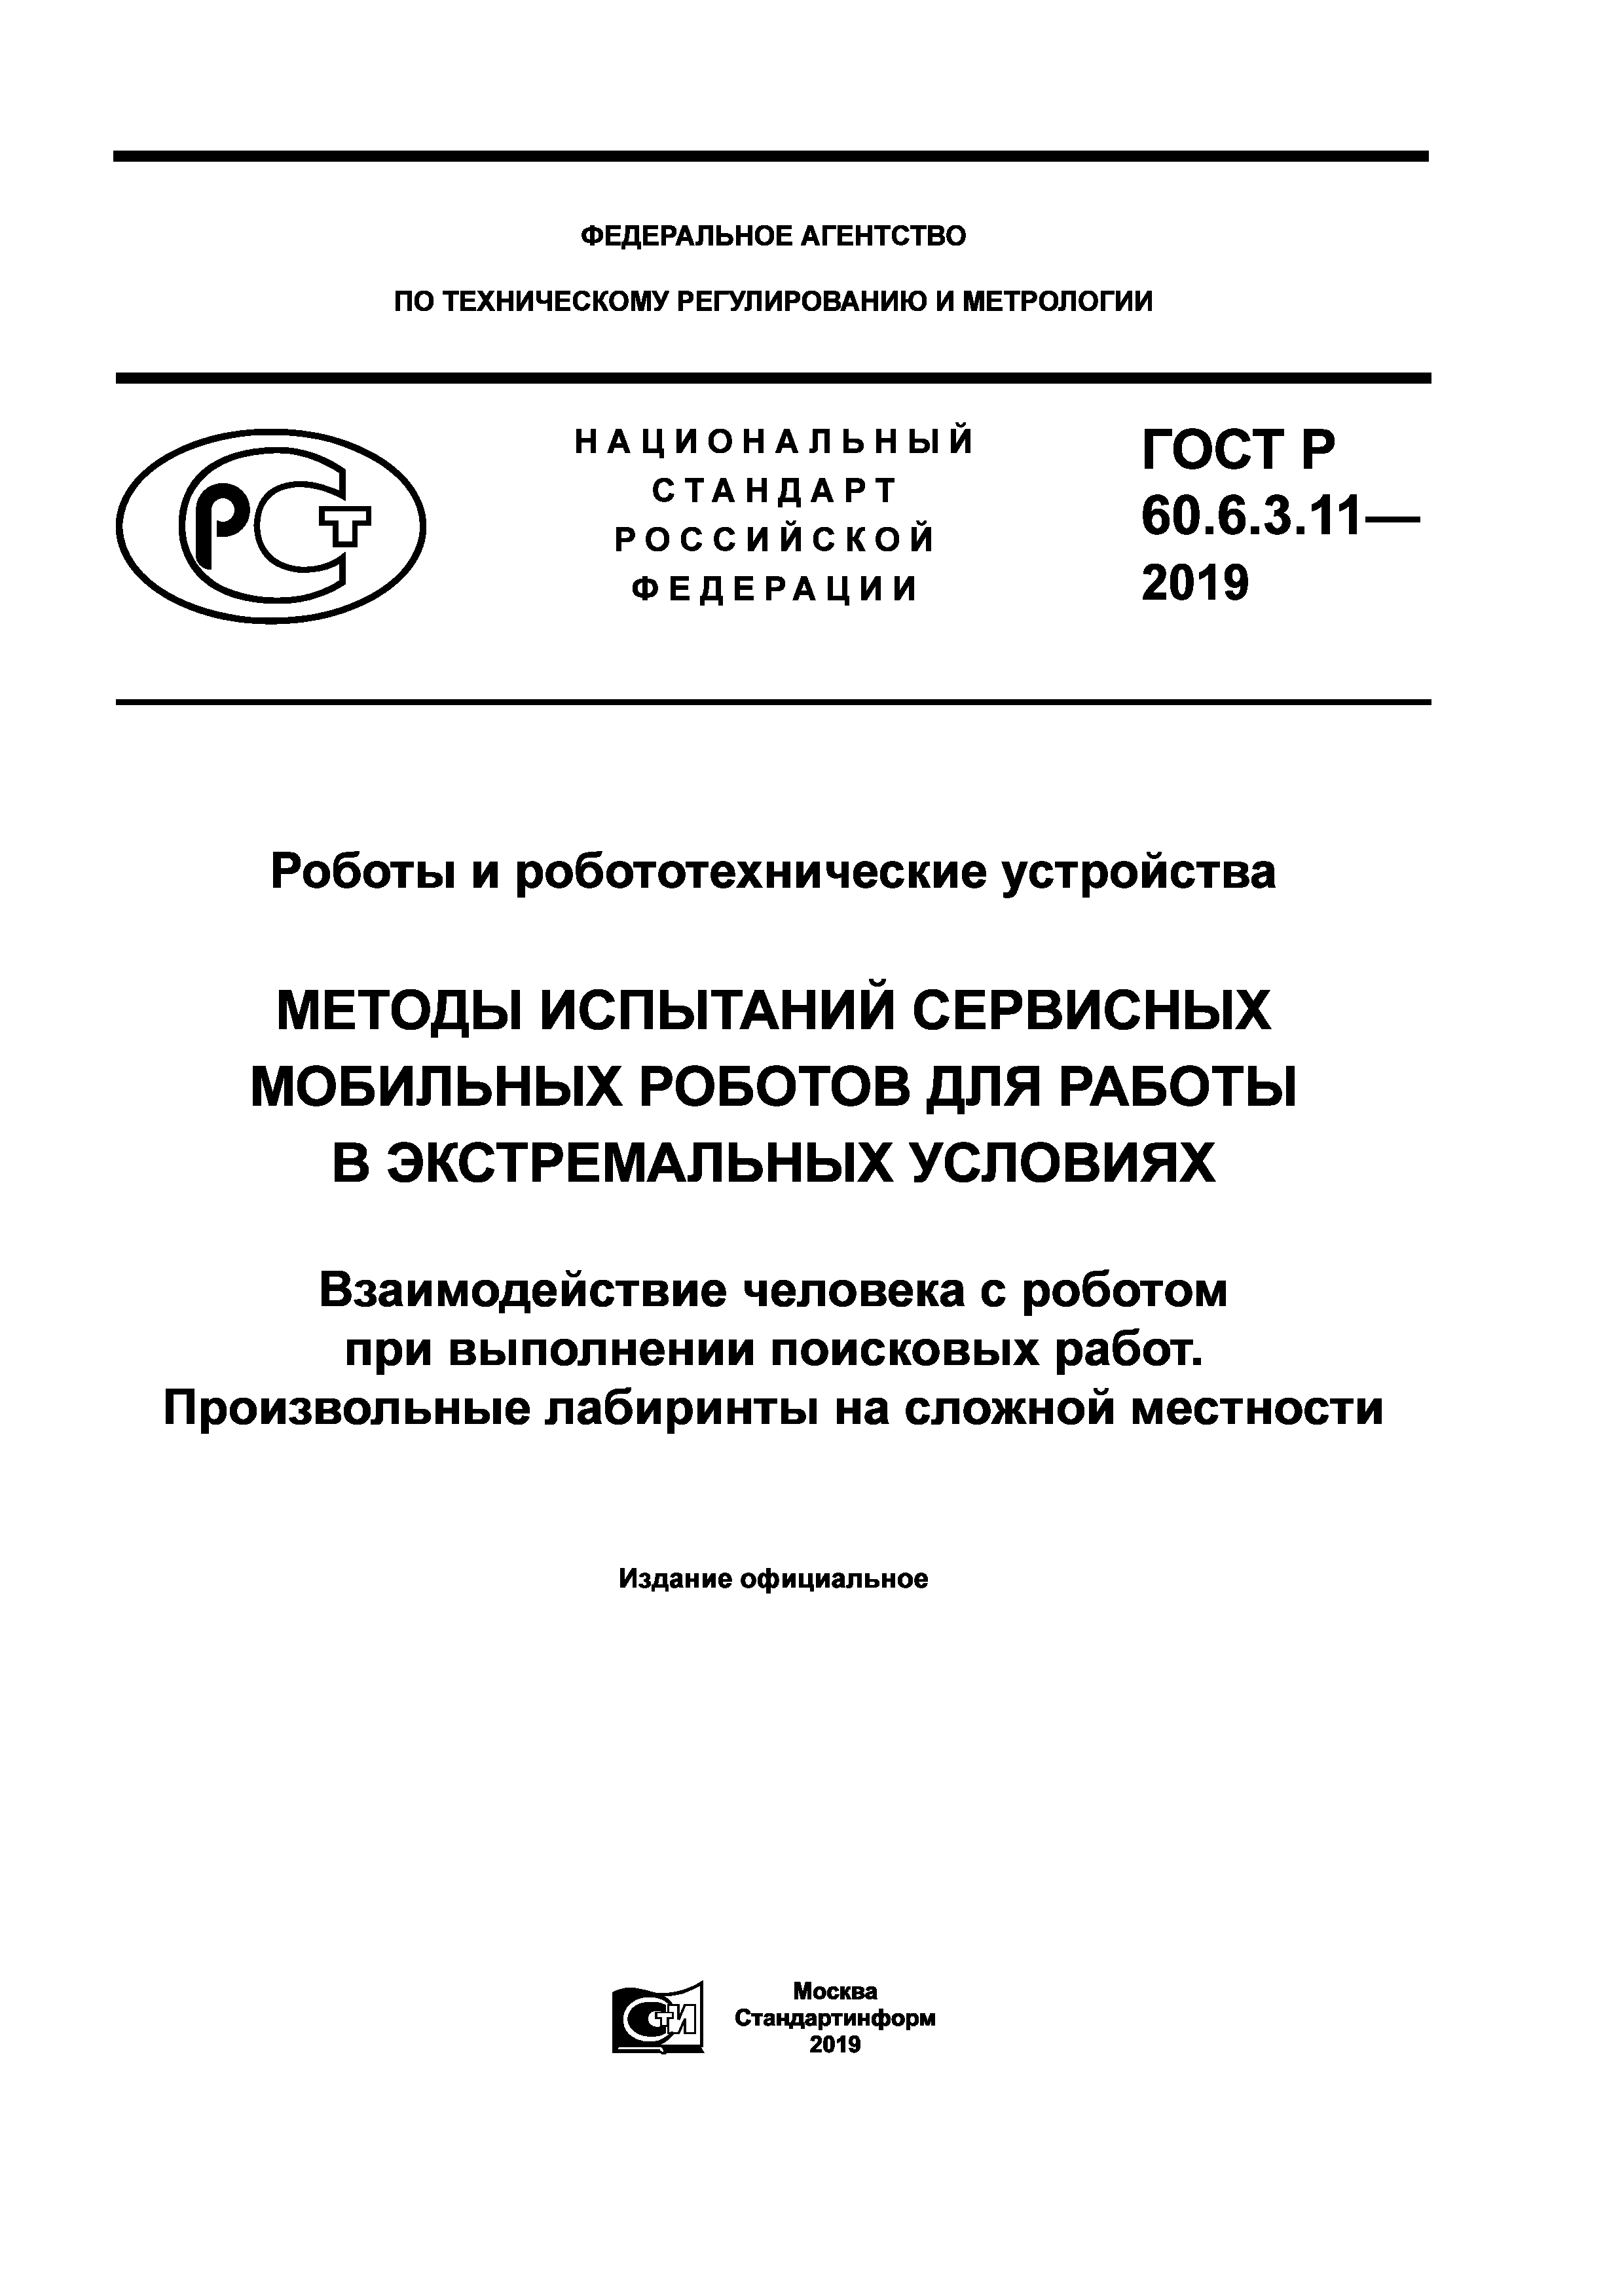 ГОСТ Р 60.6.3.11-2019